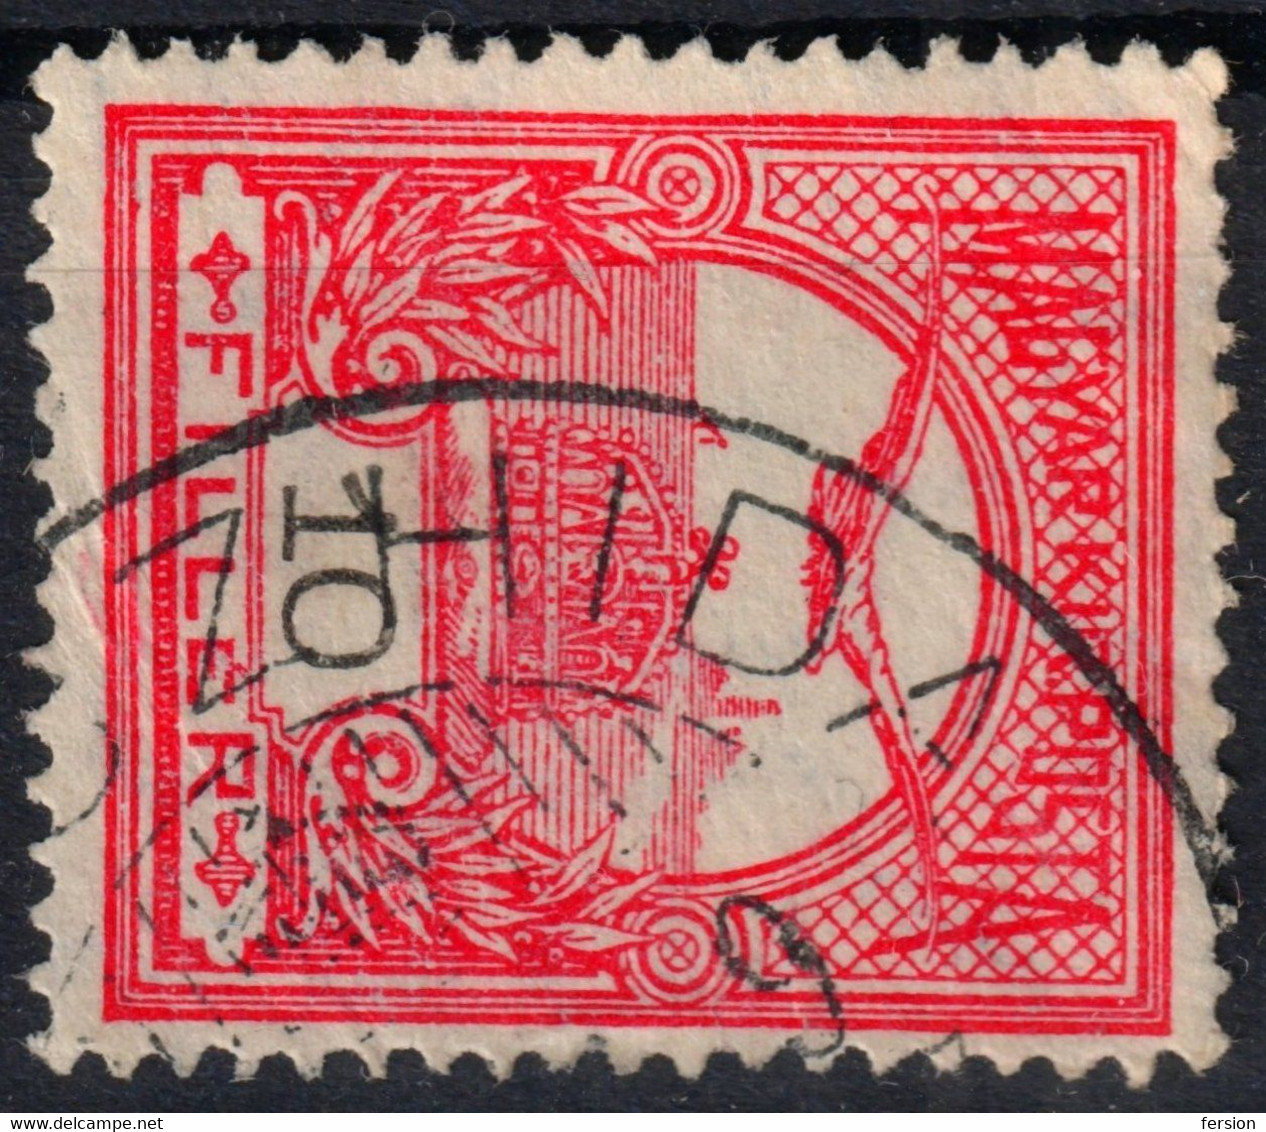 BONCZHIDA Bonțida Postmark / TURUL Crown 1910's Hungary Romania Banat Transylvania KOLOZS County KuK K.u.K - 10 Fill - Transilvania